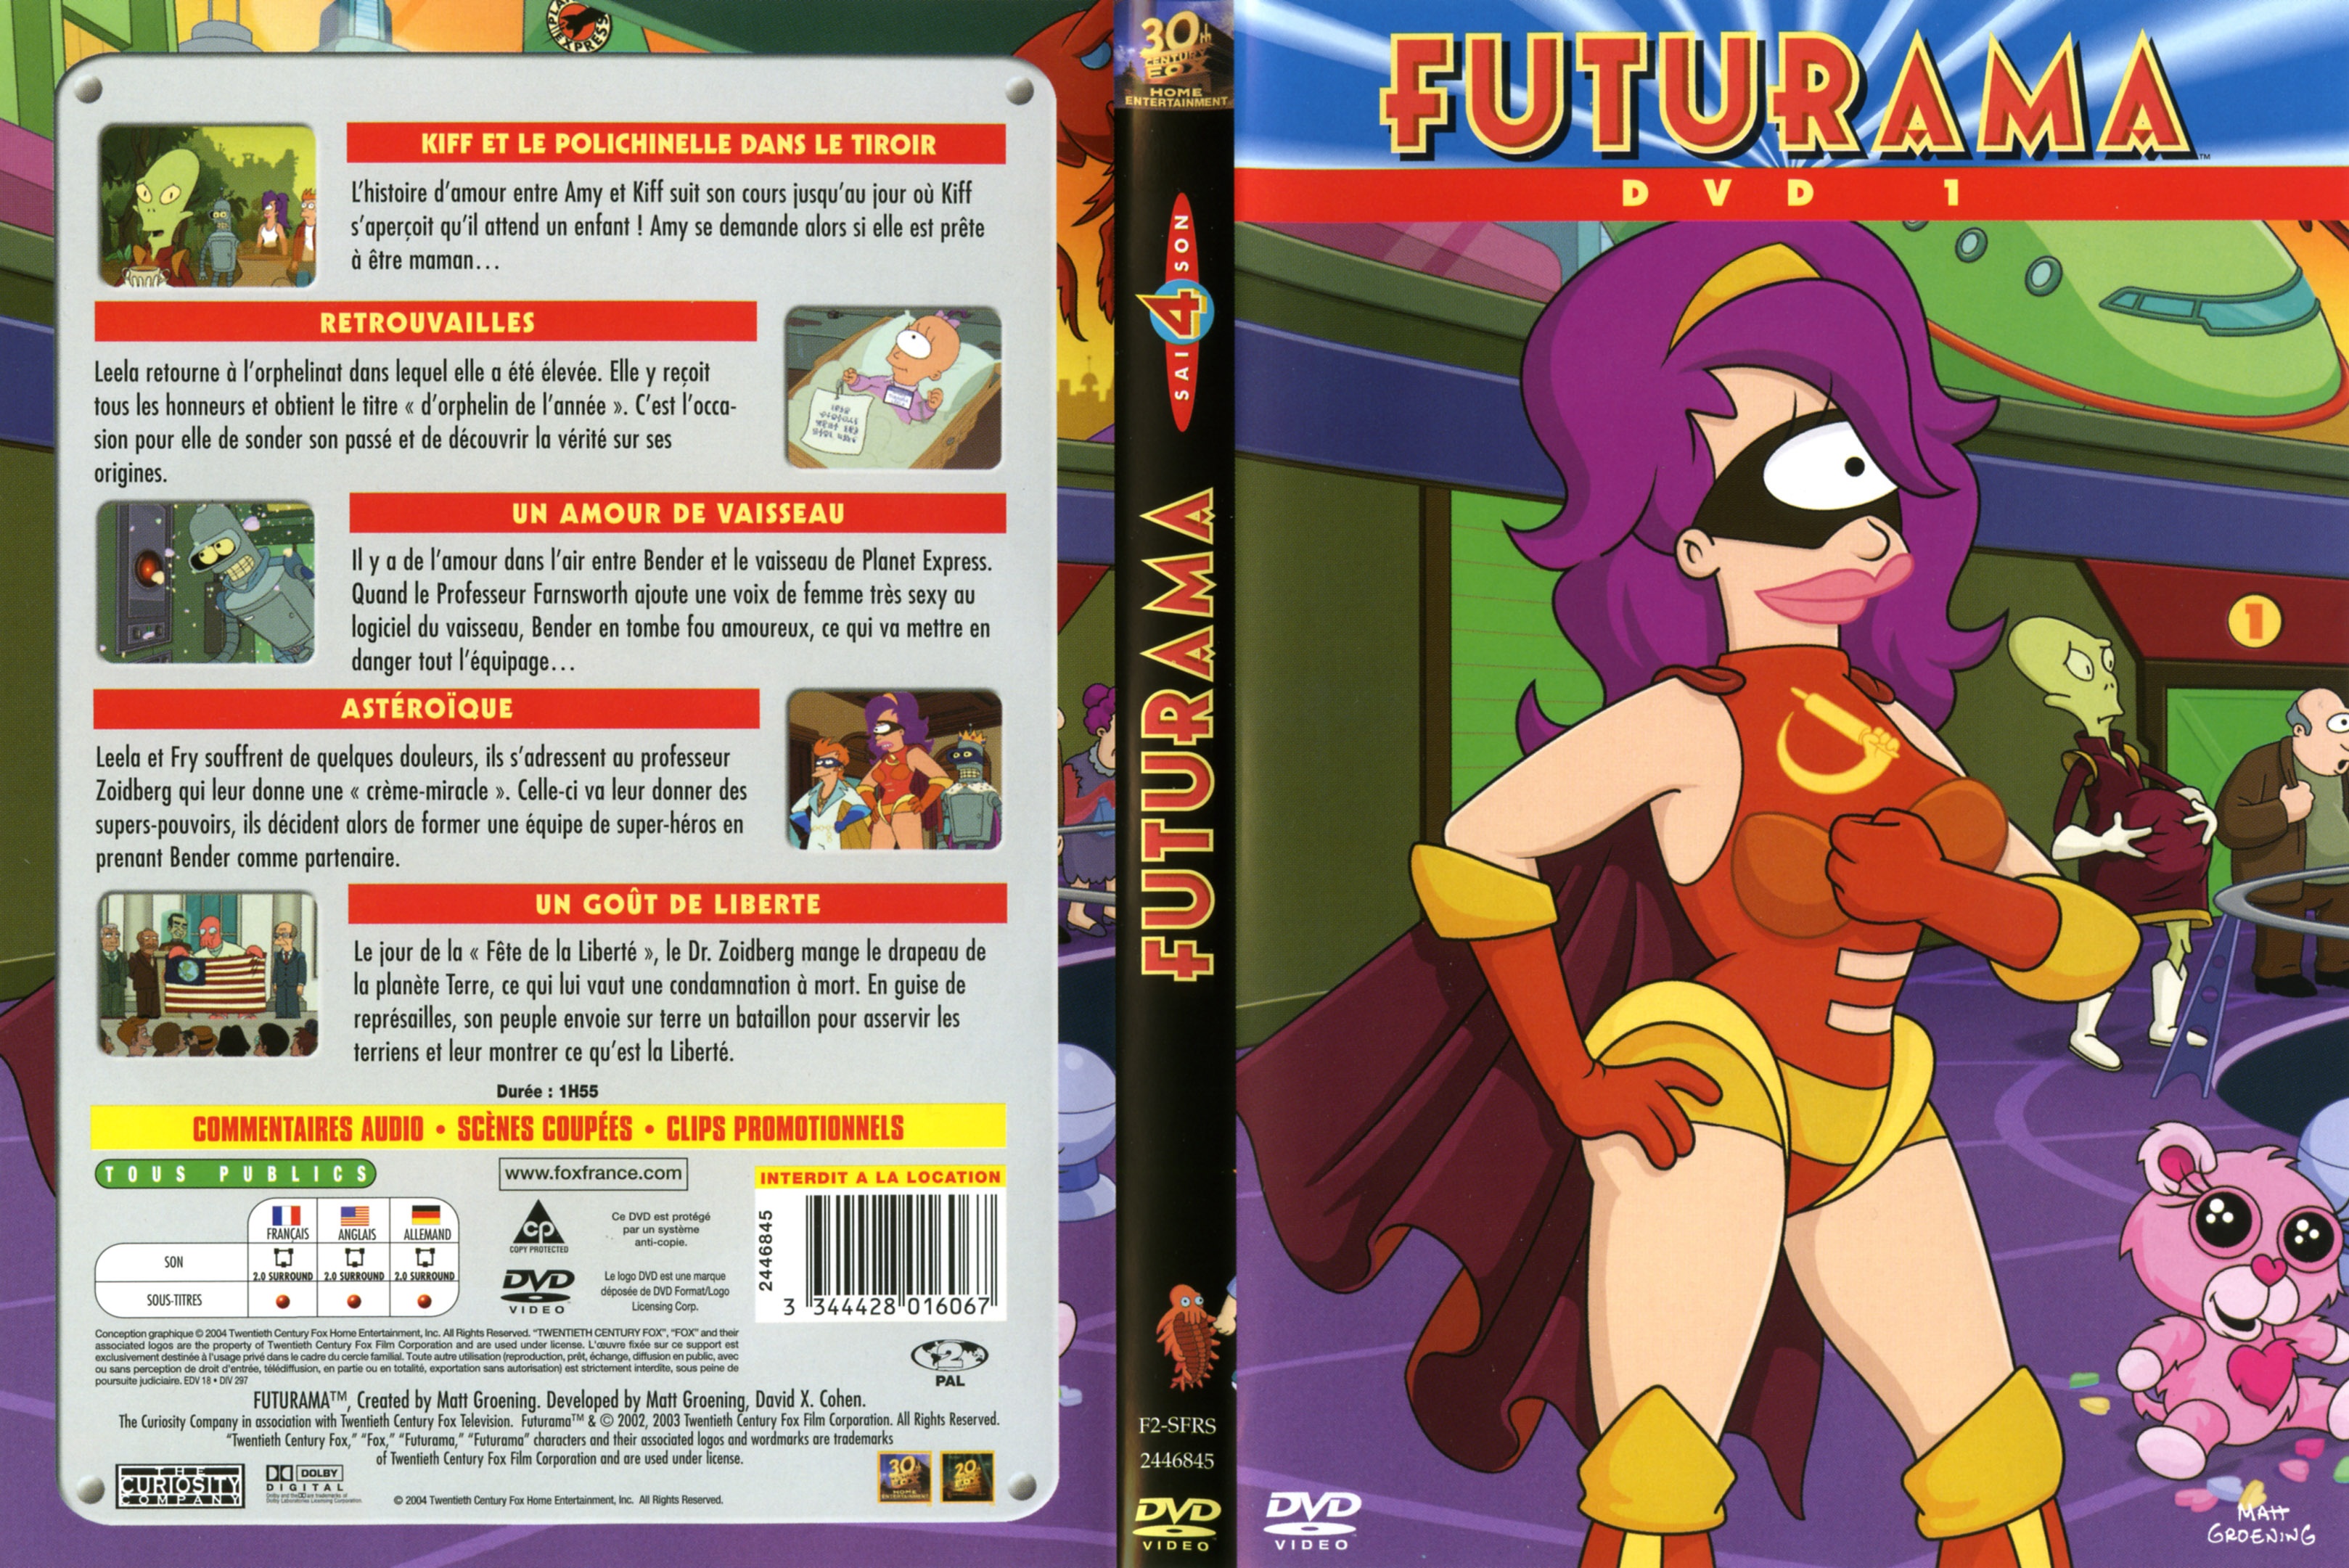 Jaquette DVD Futurama saison 4 DVD 1